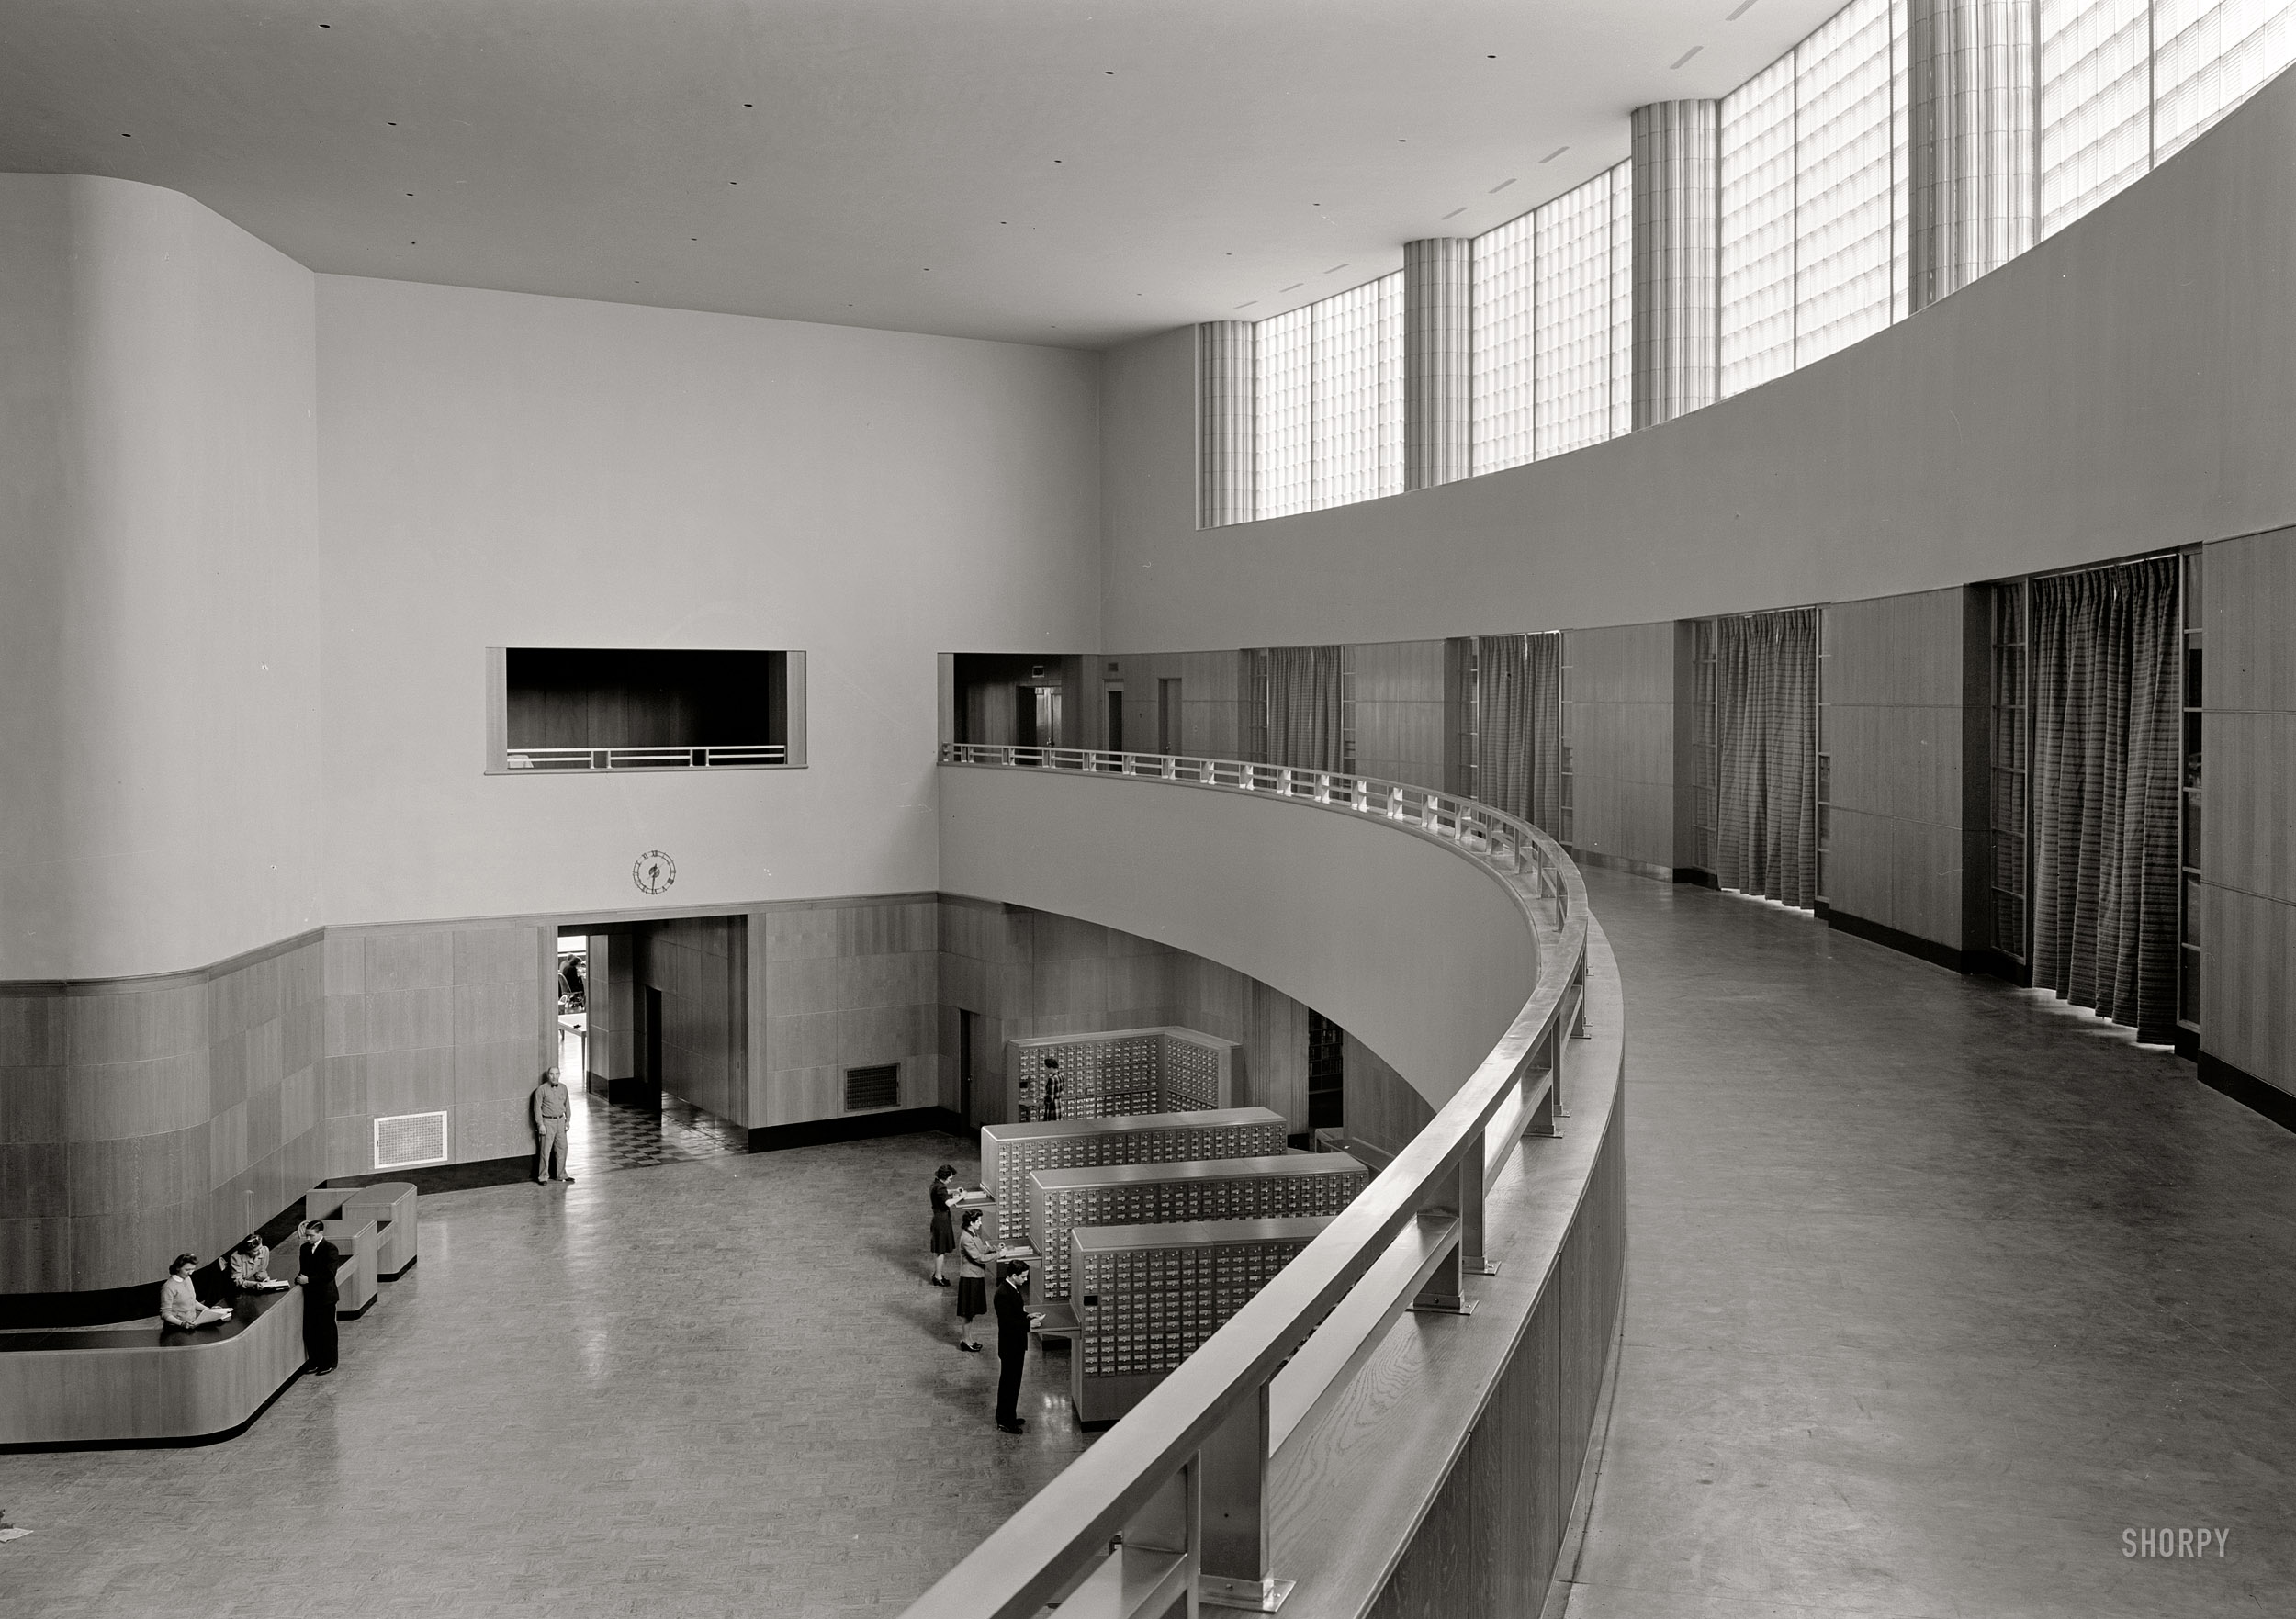 January 21, 1941. "Brooklyn Public Library, Prospect Park Plaza. Balcony curve. Githens & Keally, architect." Gottscho-Schleisner photo. View full size.